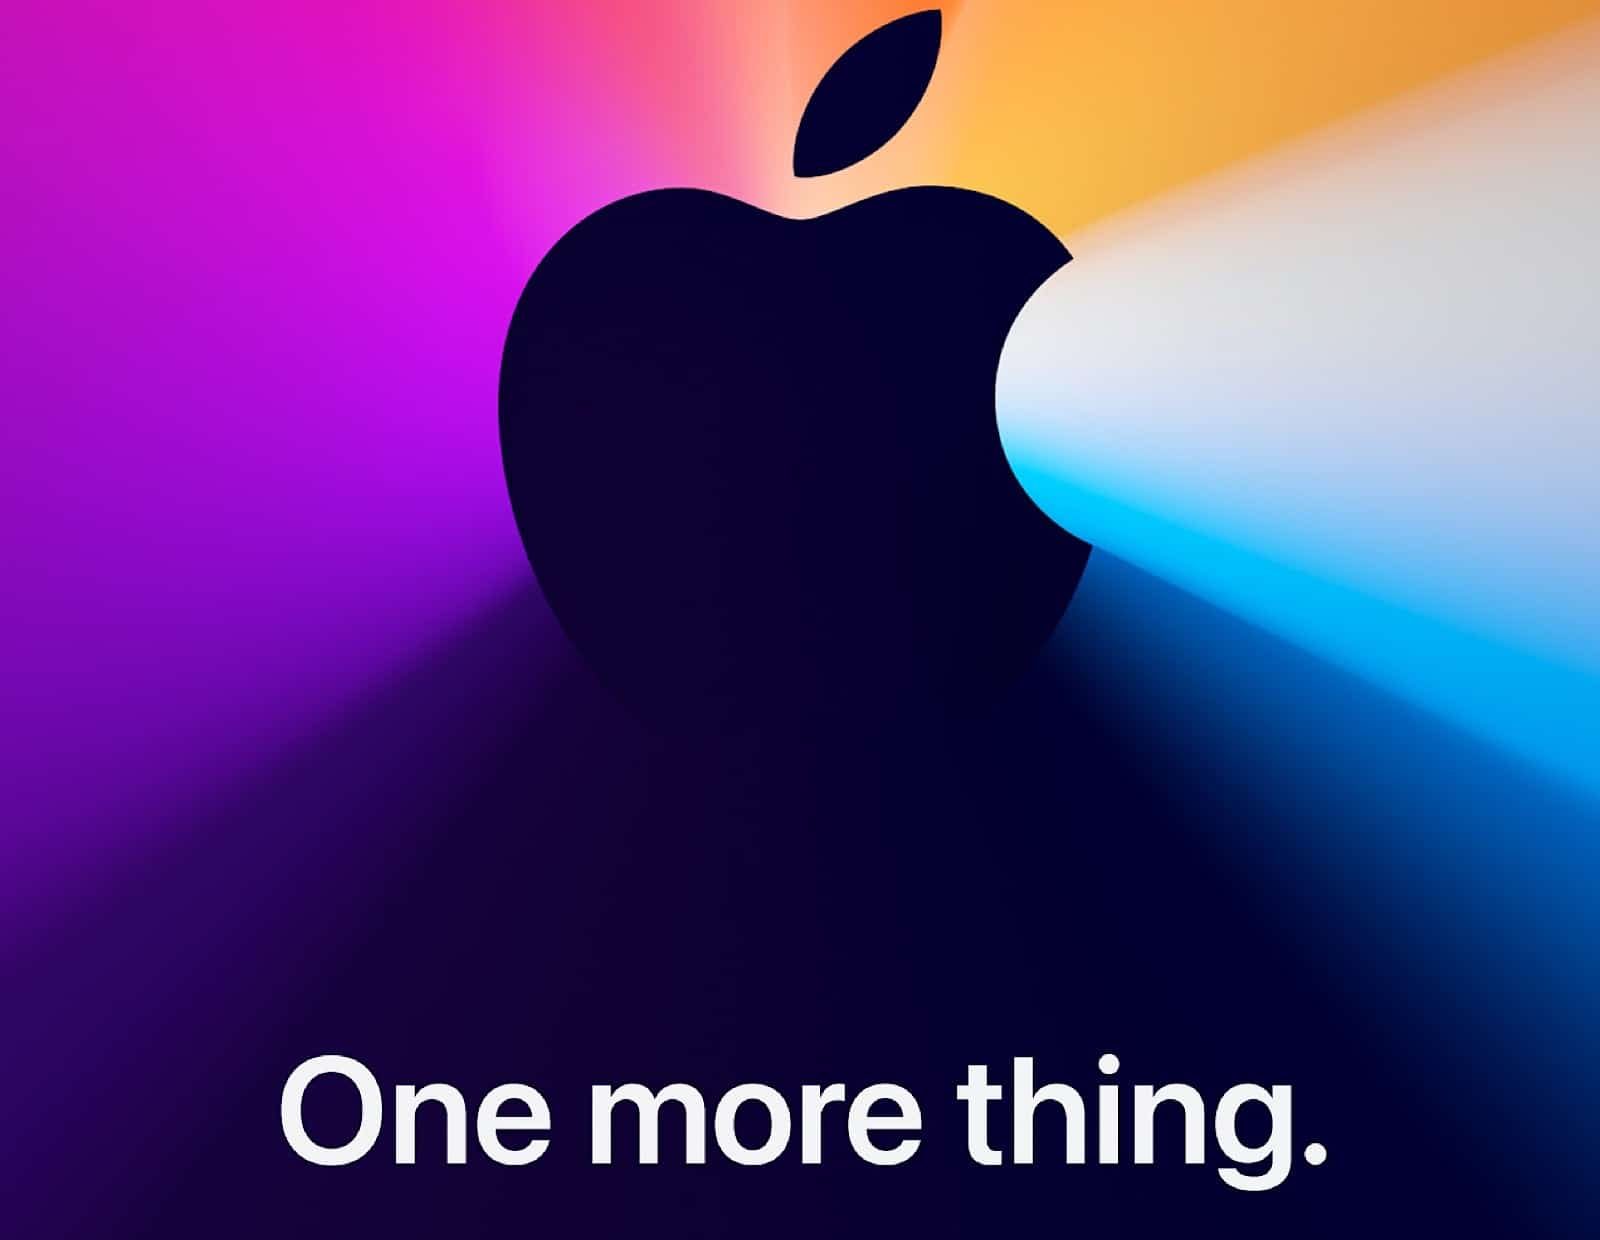 Apple's November 10 event